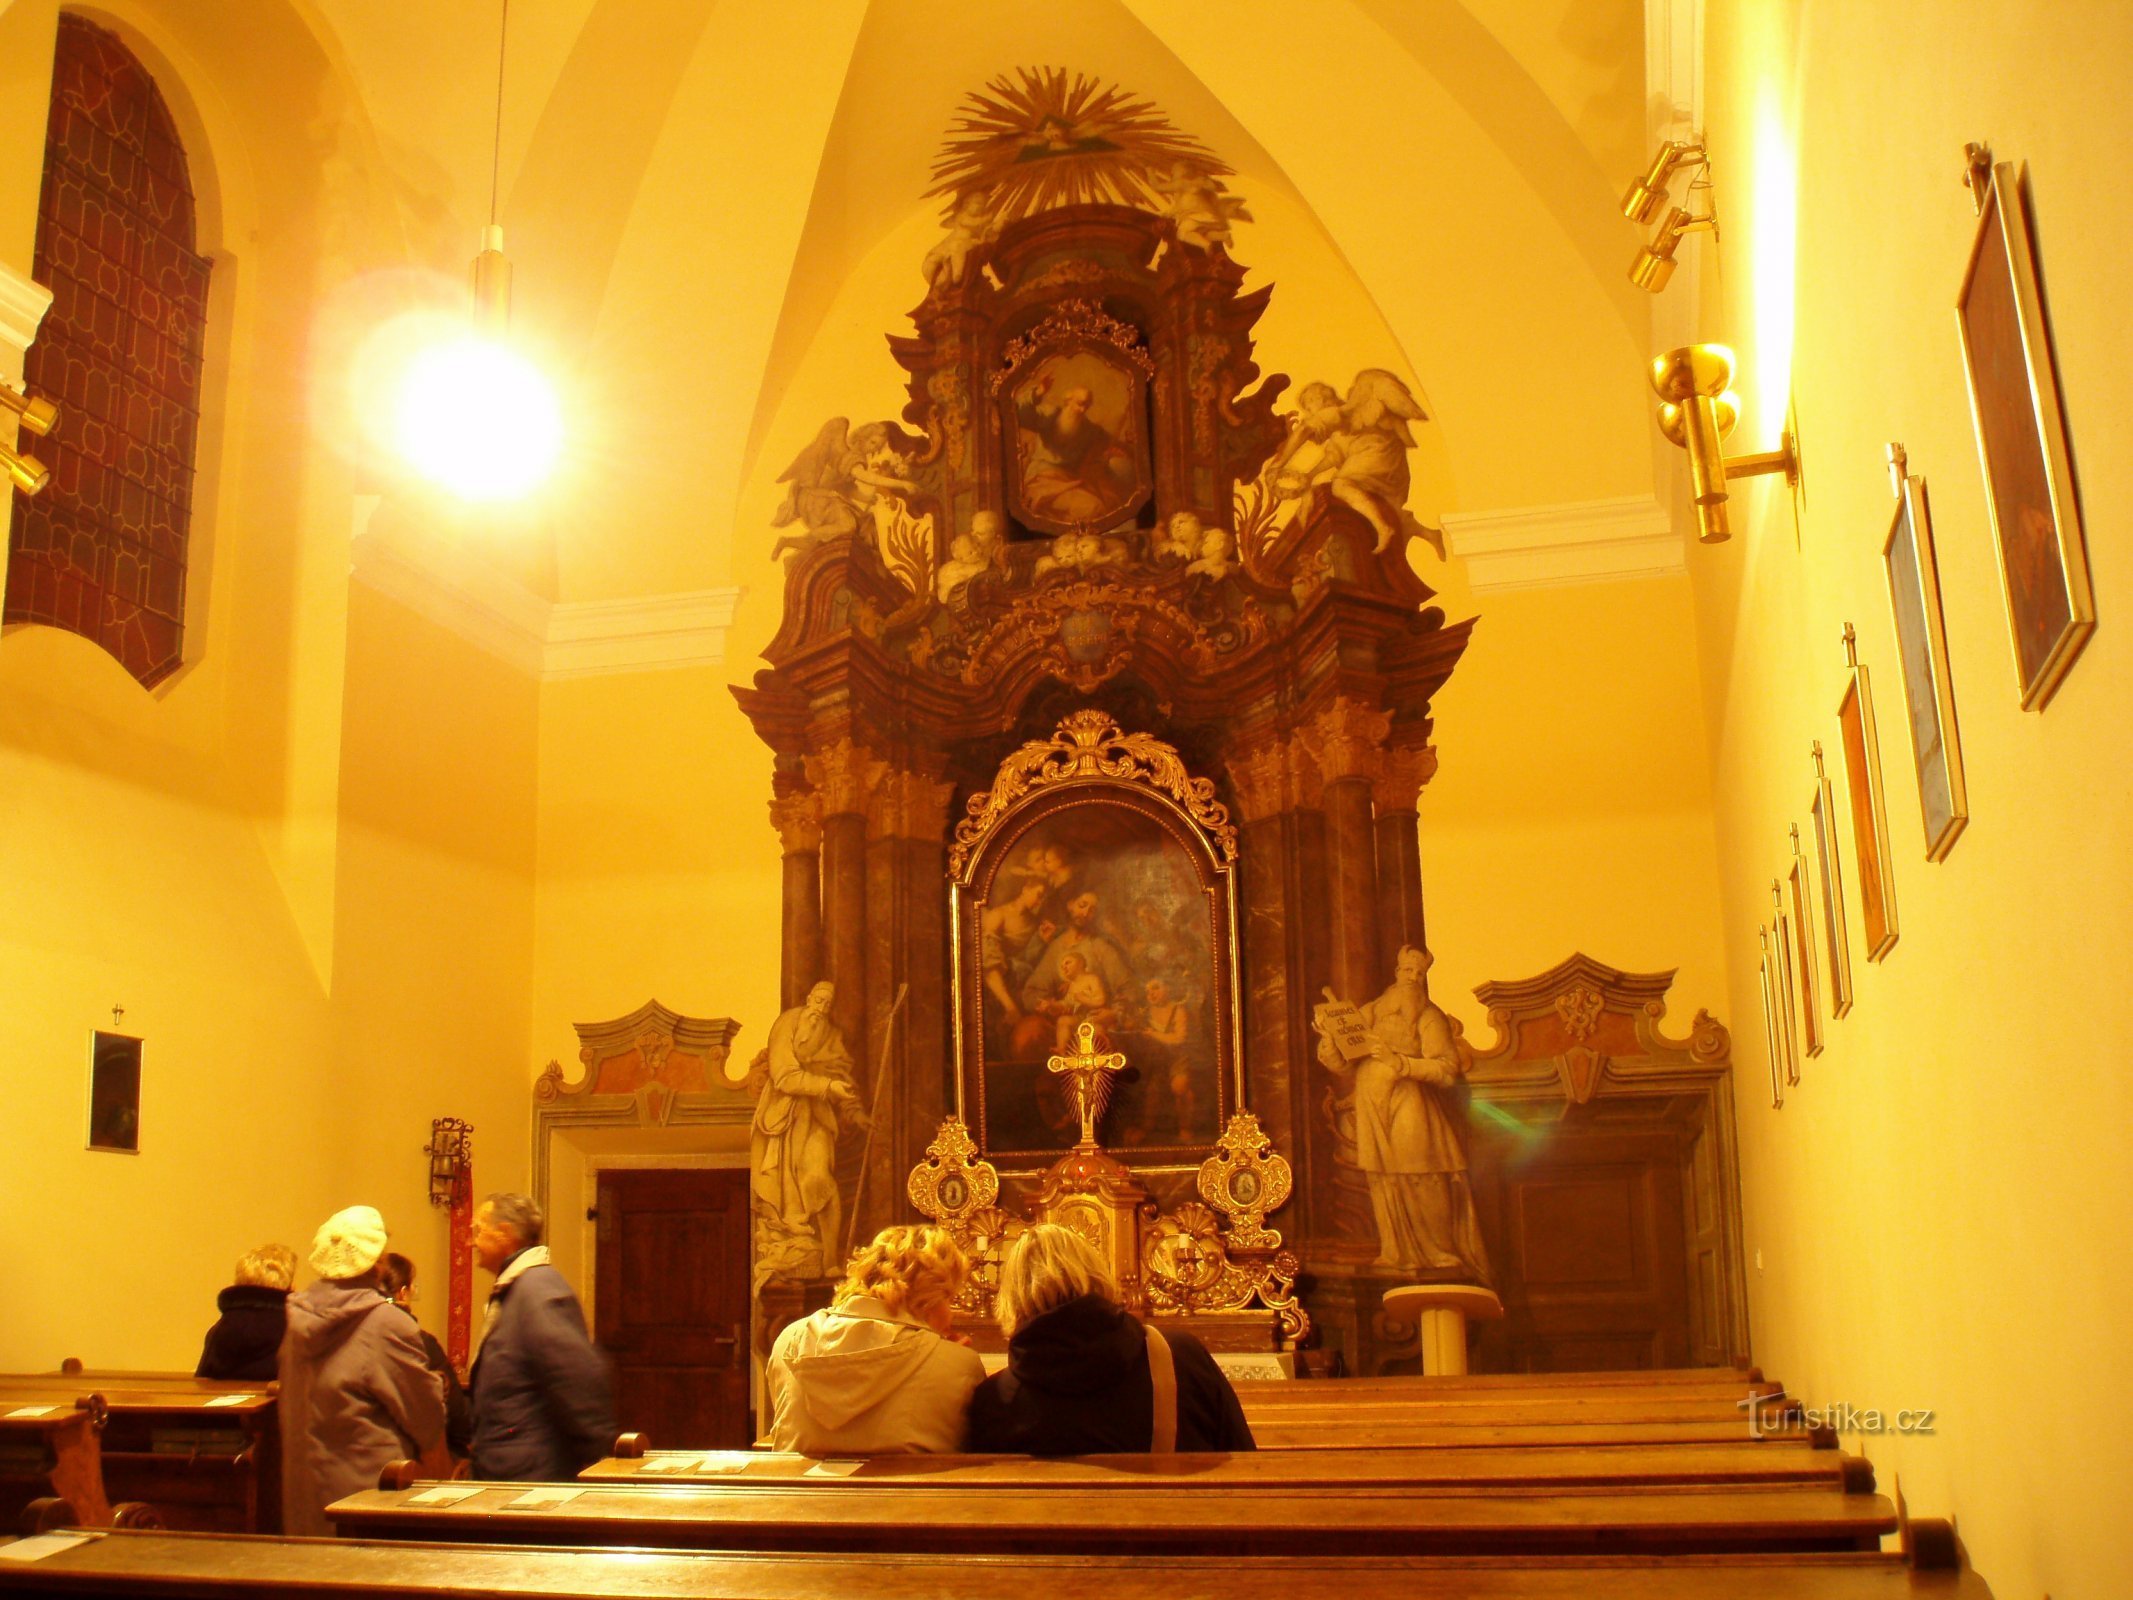 Interno della Cappella di S. Josefa (Hradec Králové, 19.3.2010)